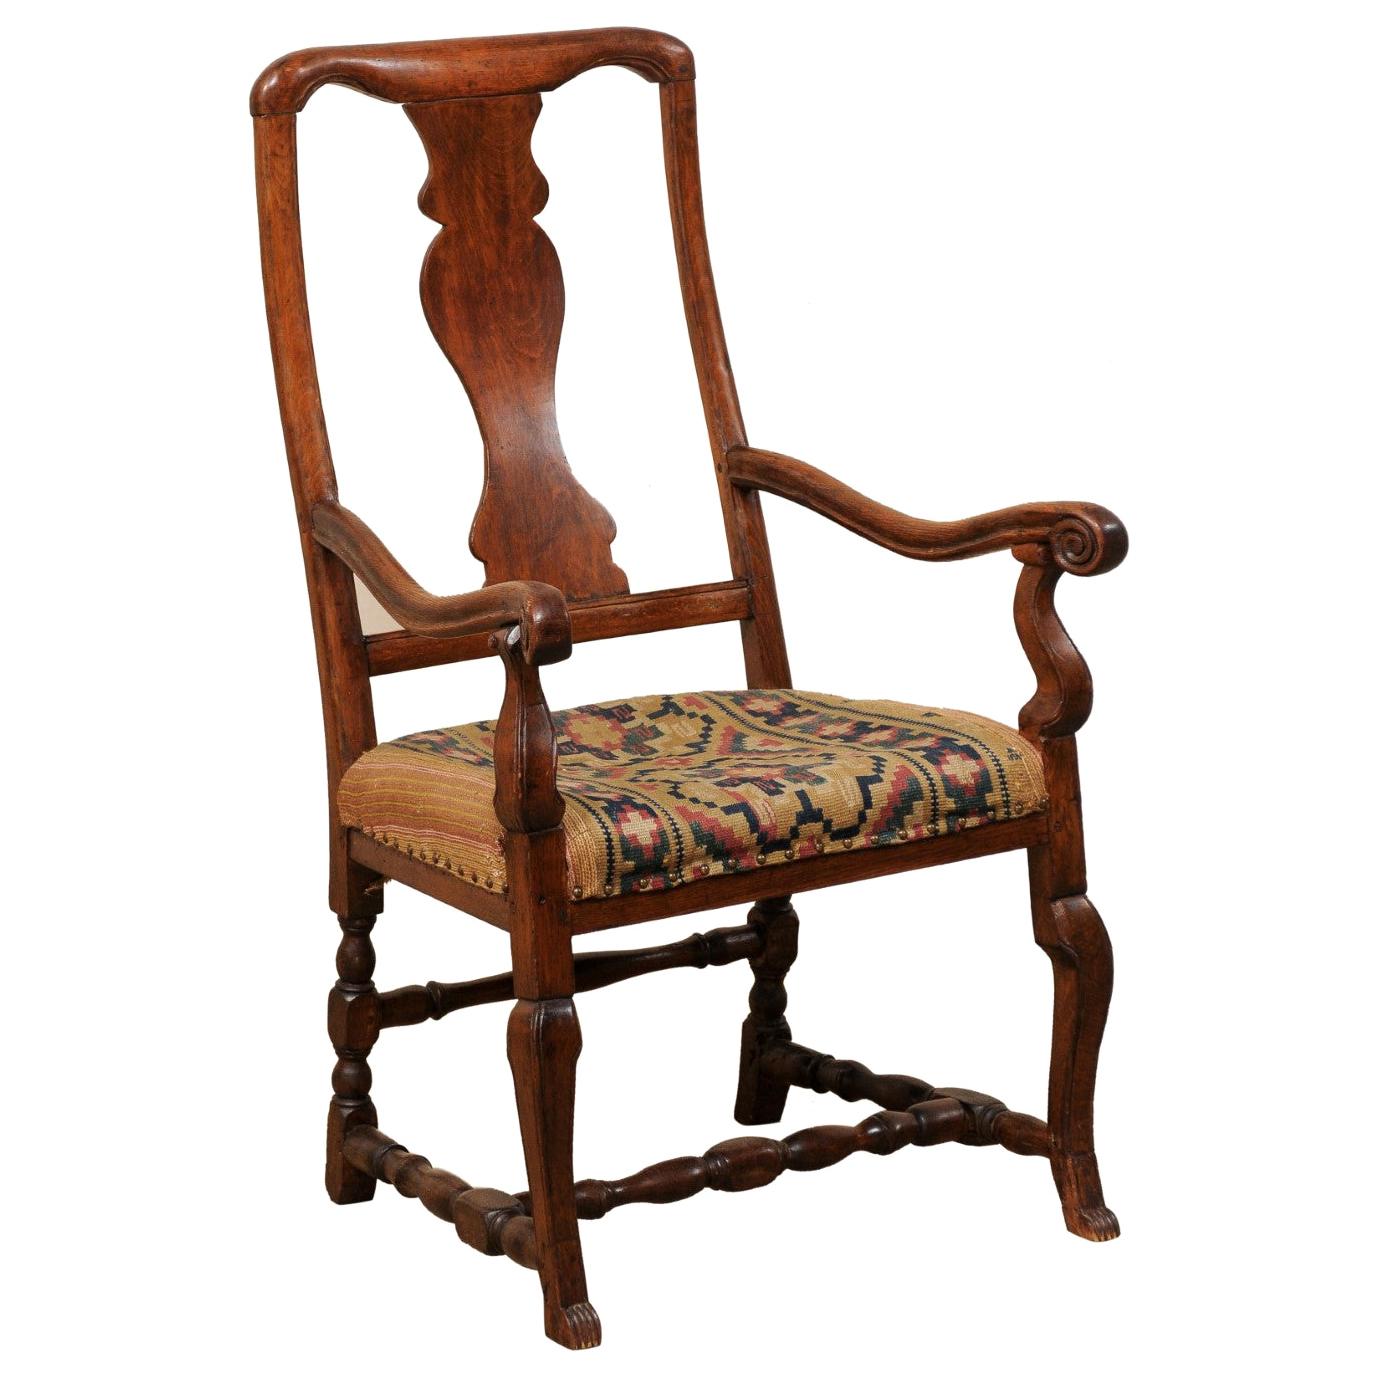 Swedish Period Rococo Armchair with Handwoven Allmoge Textile Seat